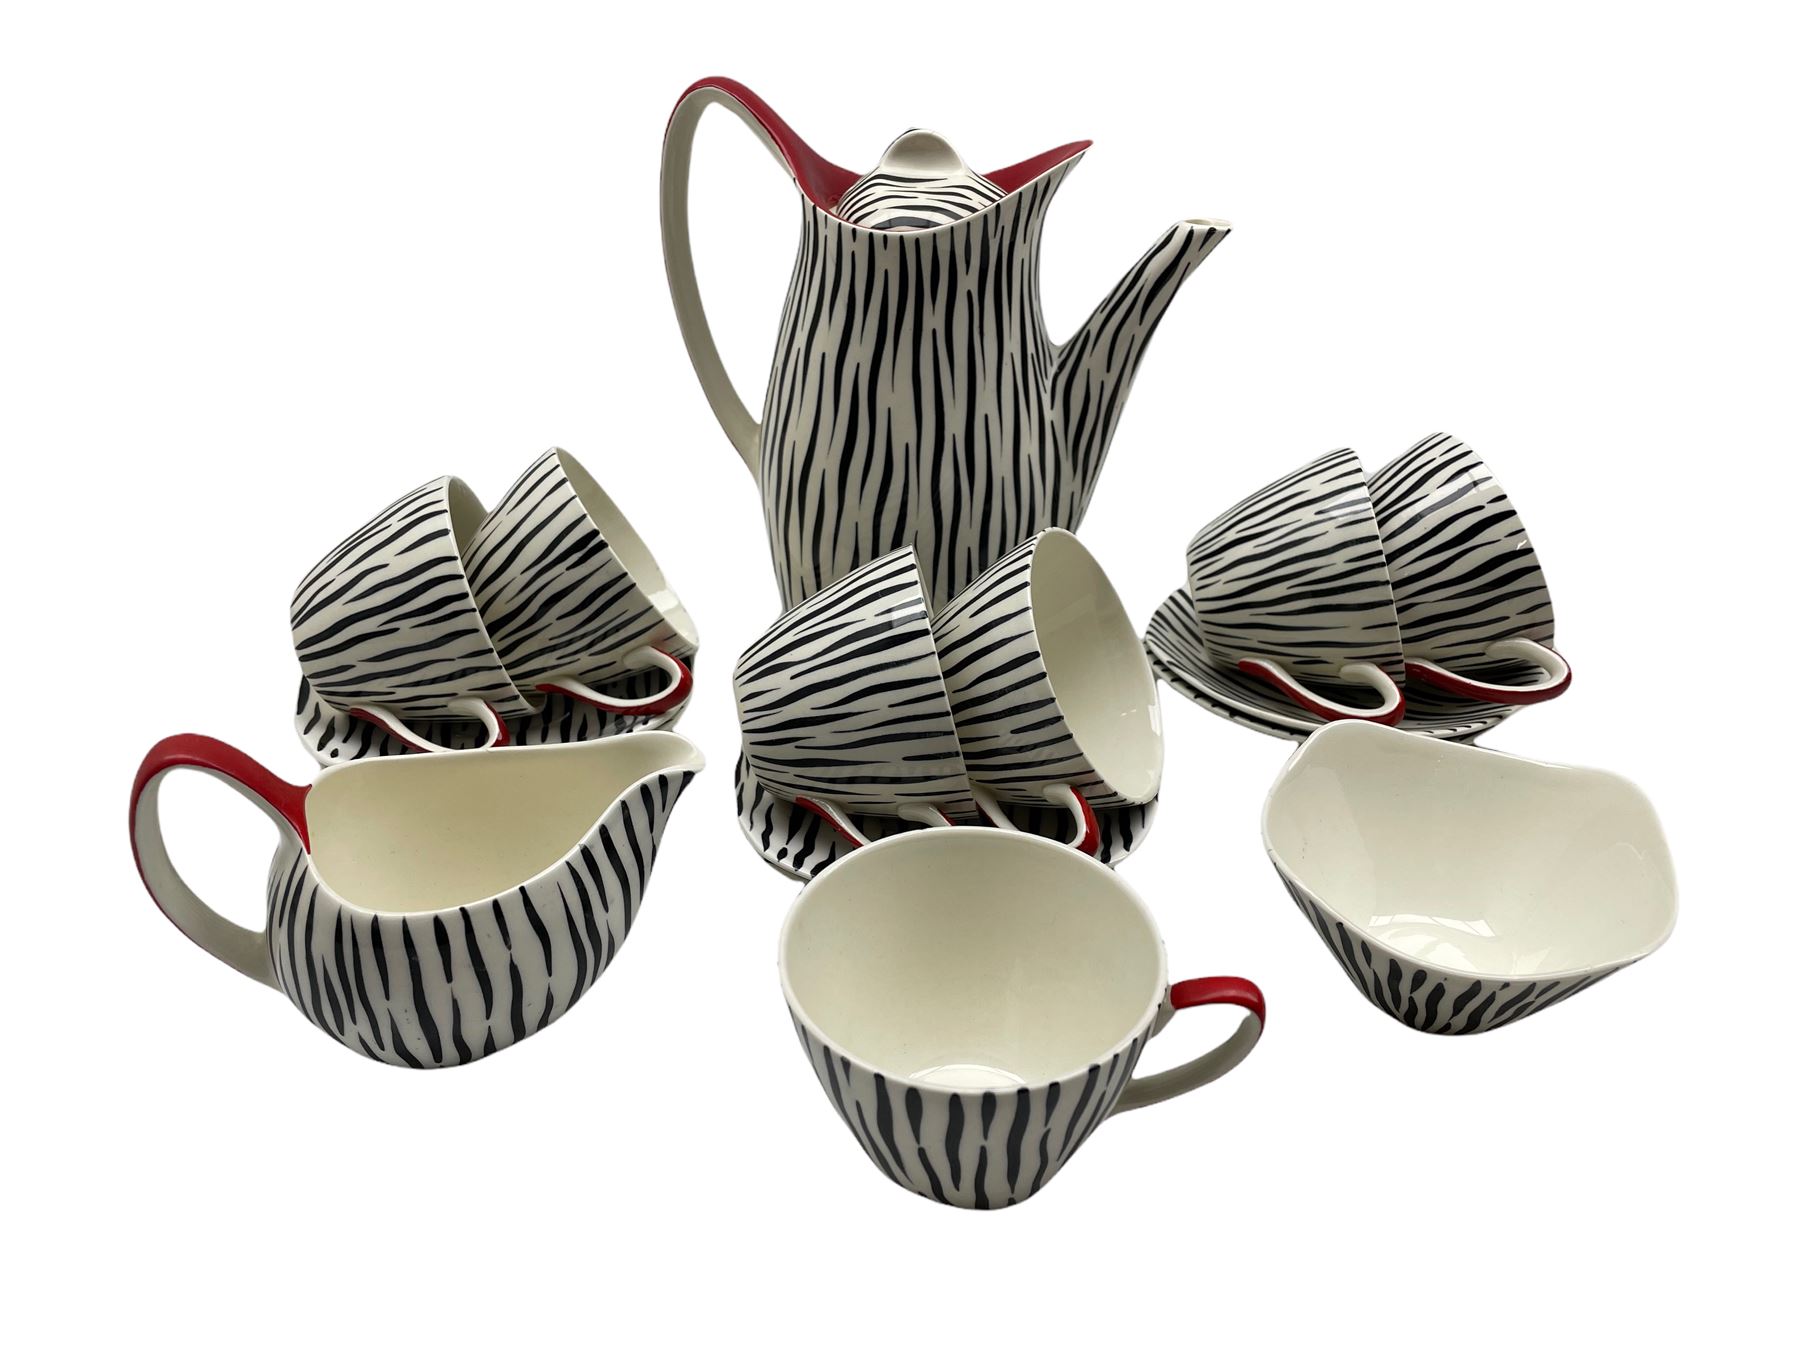 Midwinter Stylecarft Zambesi pattern coffee set designed by Jessie Tait